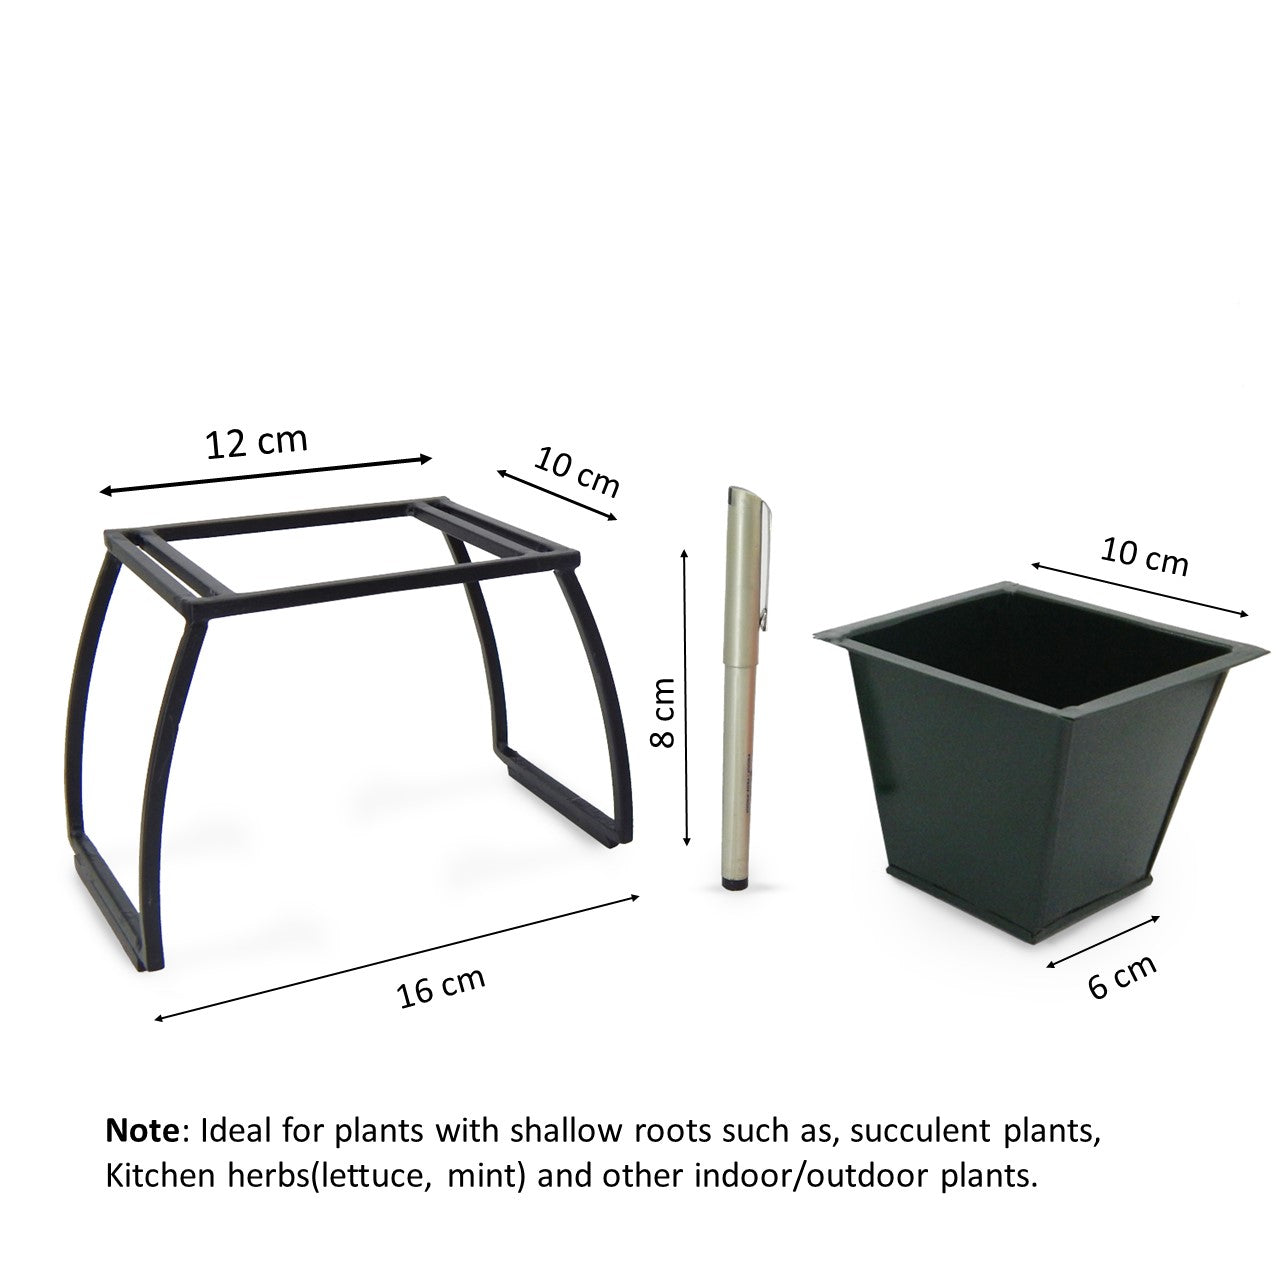 ecofynd Stackable Table Top Planter Pot with Metal Stand, Dark Green Desktop Planter freeshipping - Ecofynd